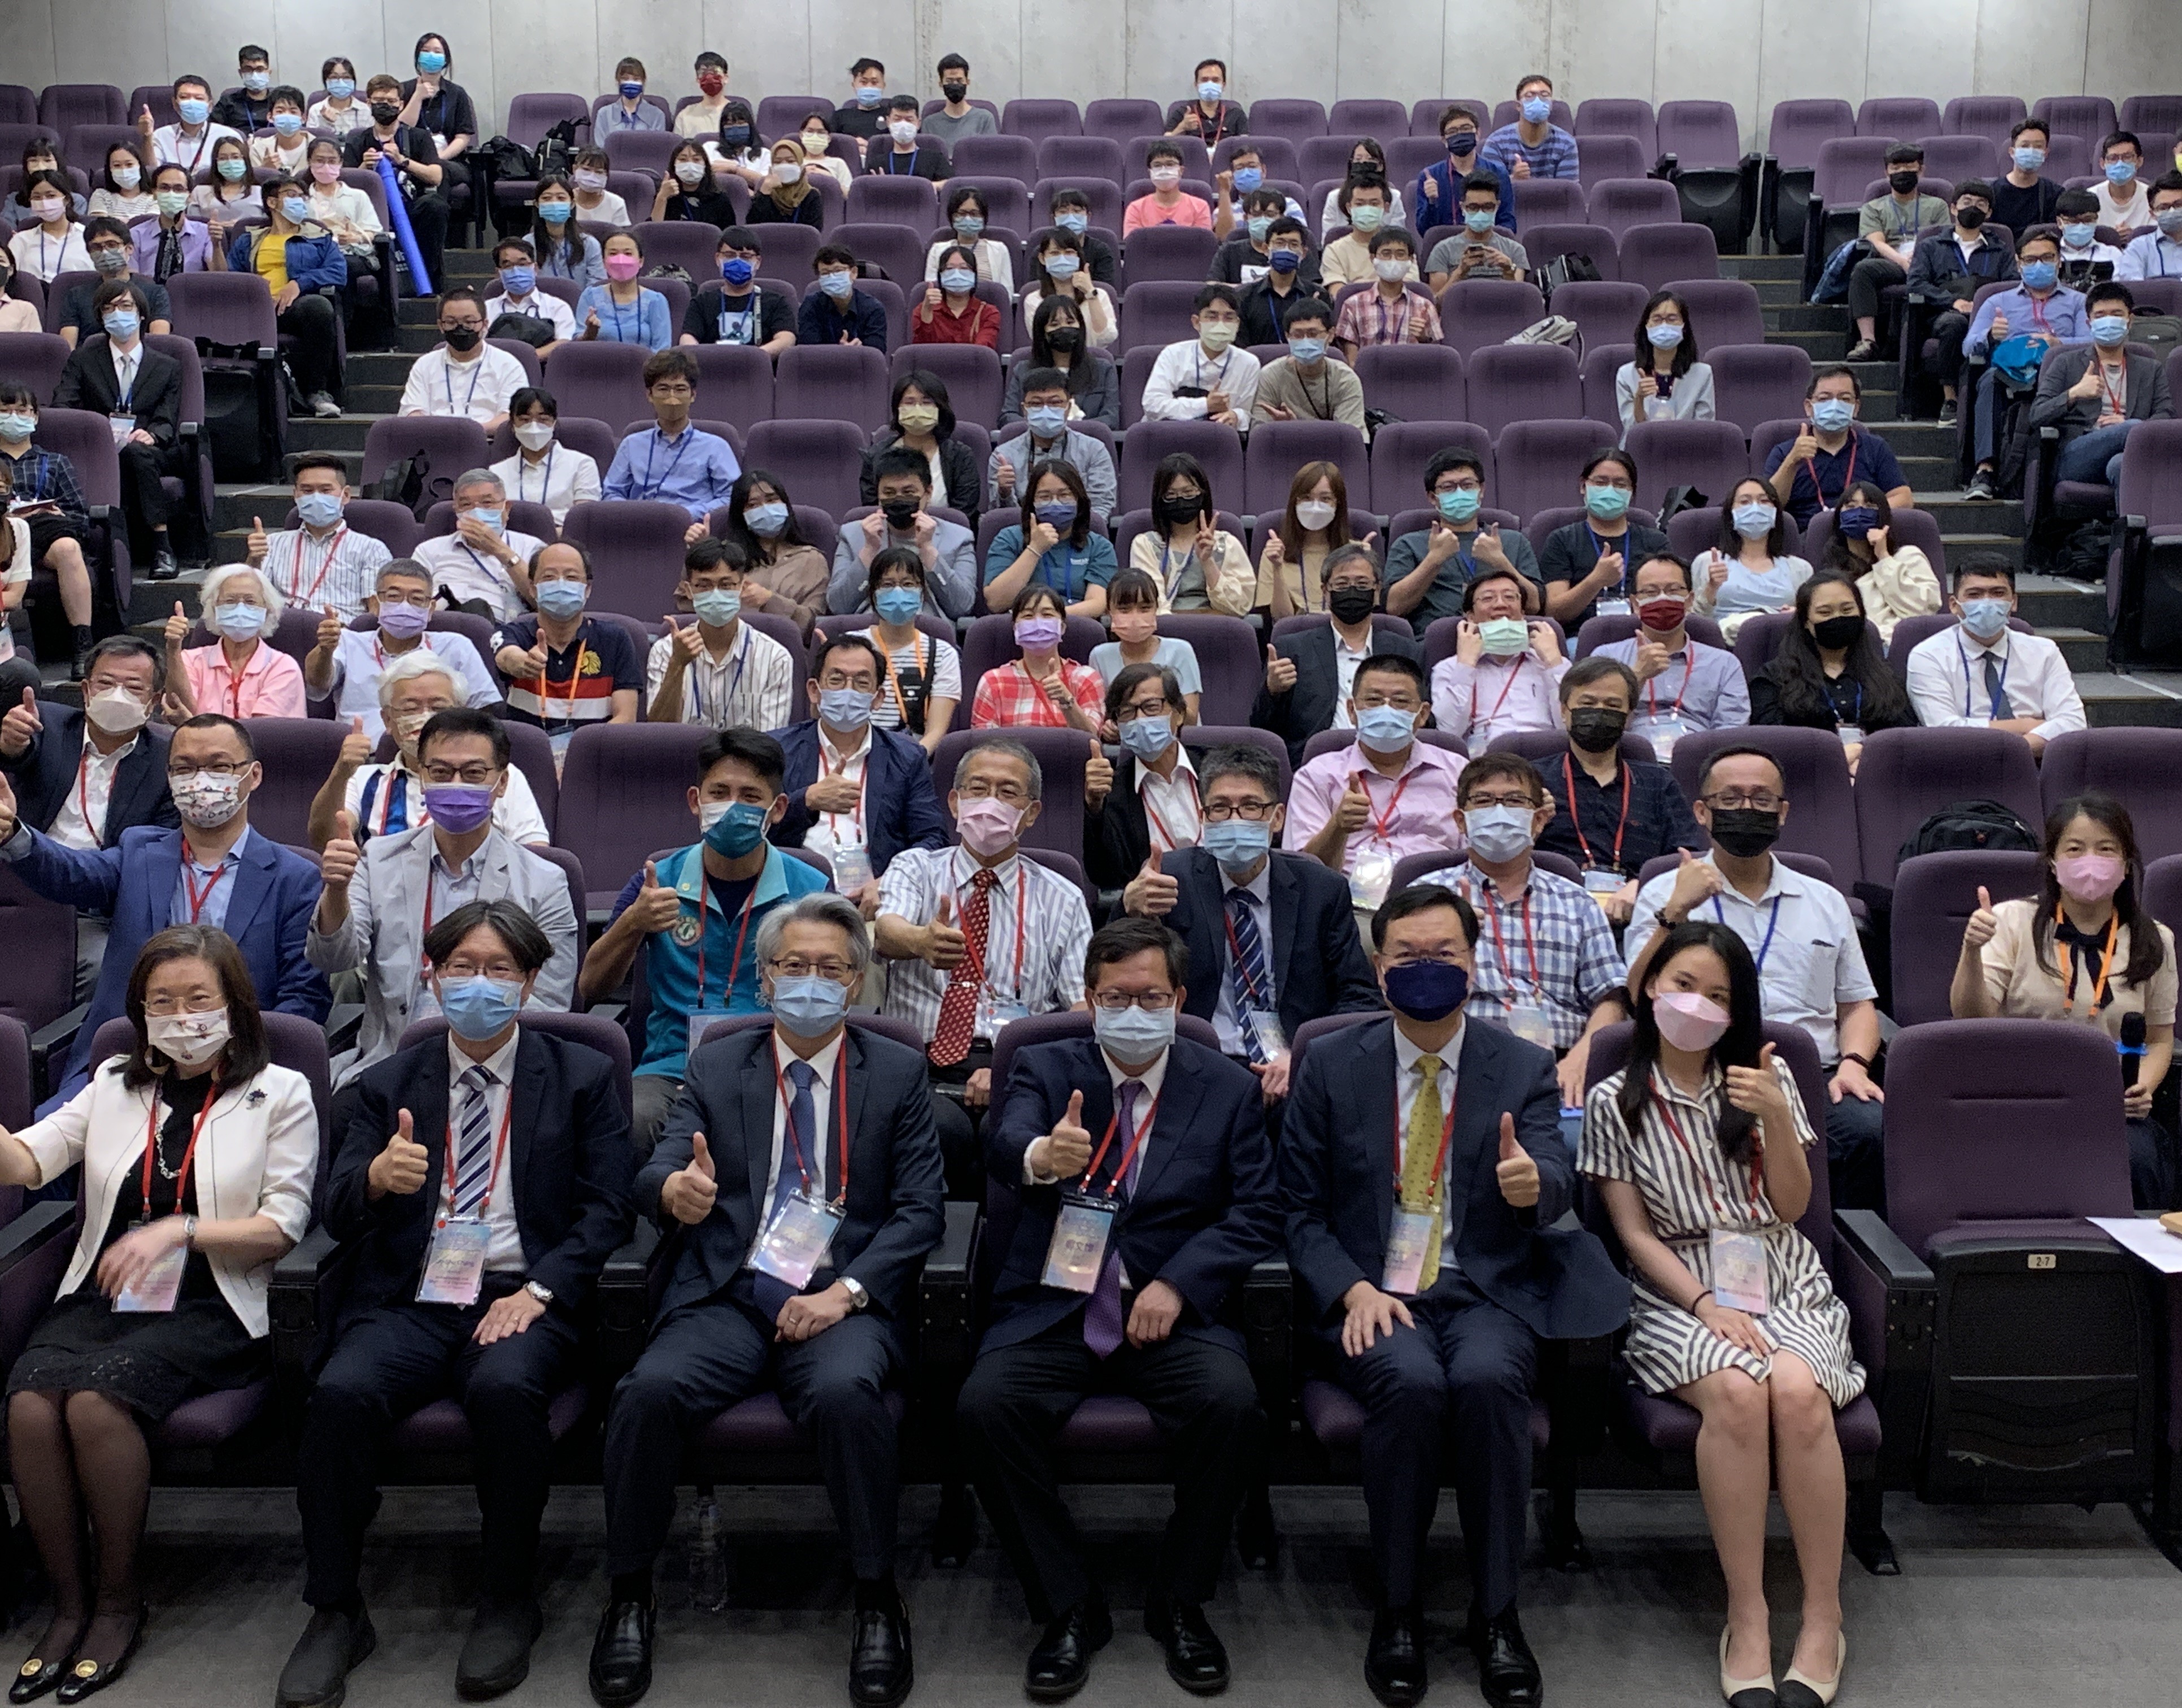 The BEST Conference & International Symposium on Biotechnology and Bioengineering kicks off at Yuan Ze University